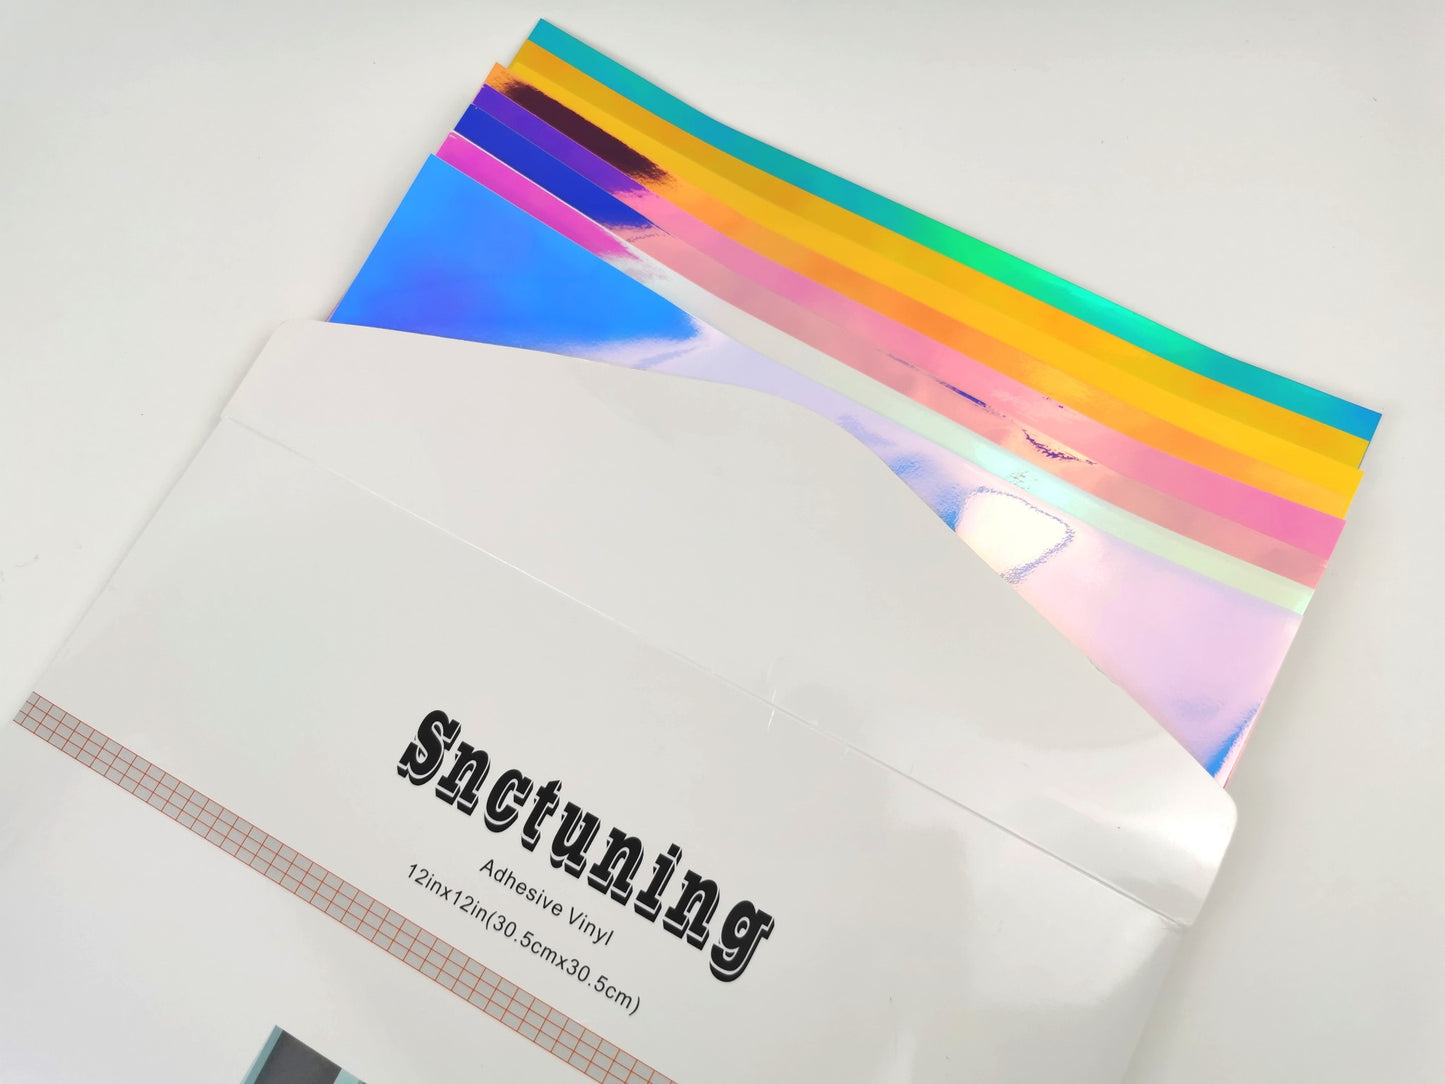 SNC Tuning Quality Holographic Rainbow Vinyl Sticker Sheets 8 pk Assorted 12"x12